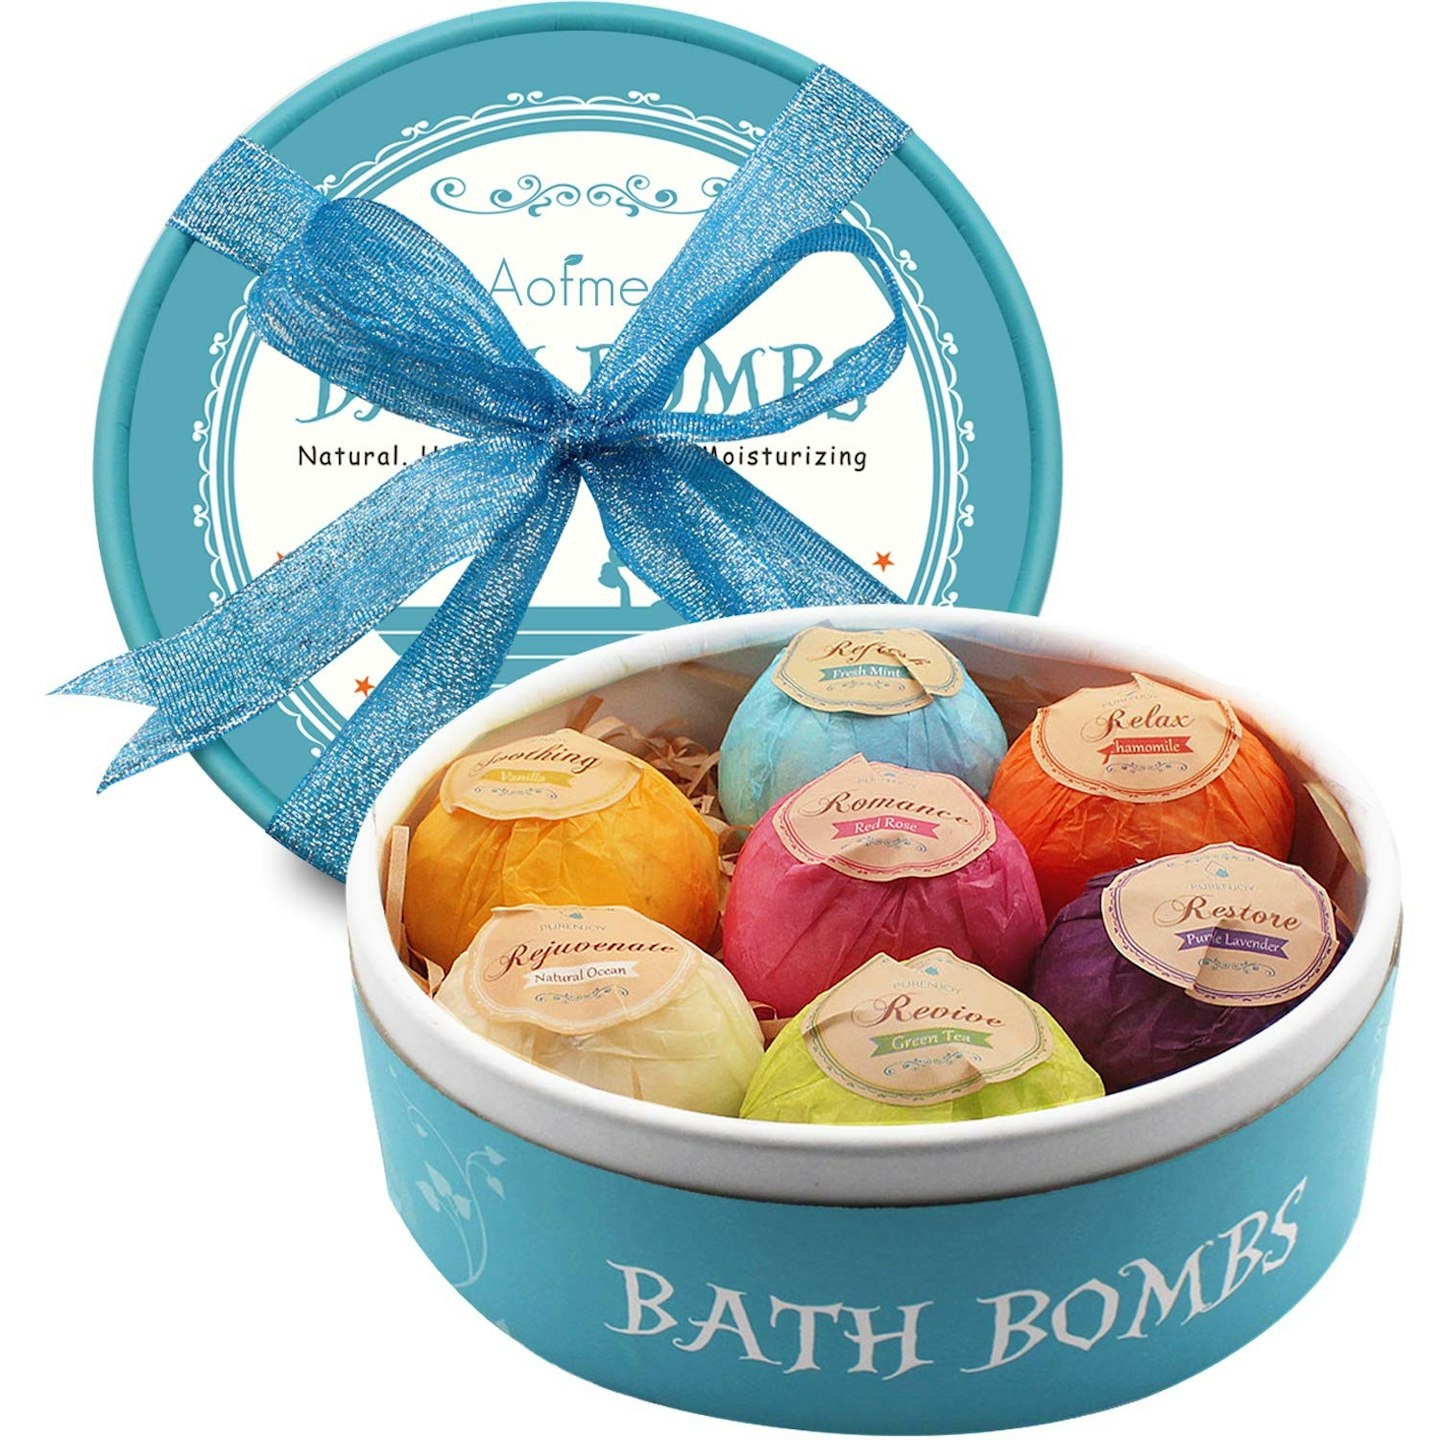 Aofmee Bath Bombs Gift Set